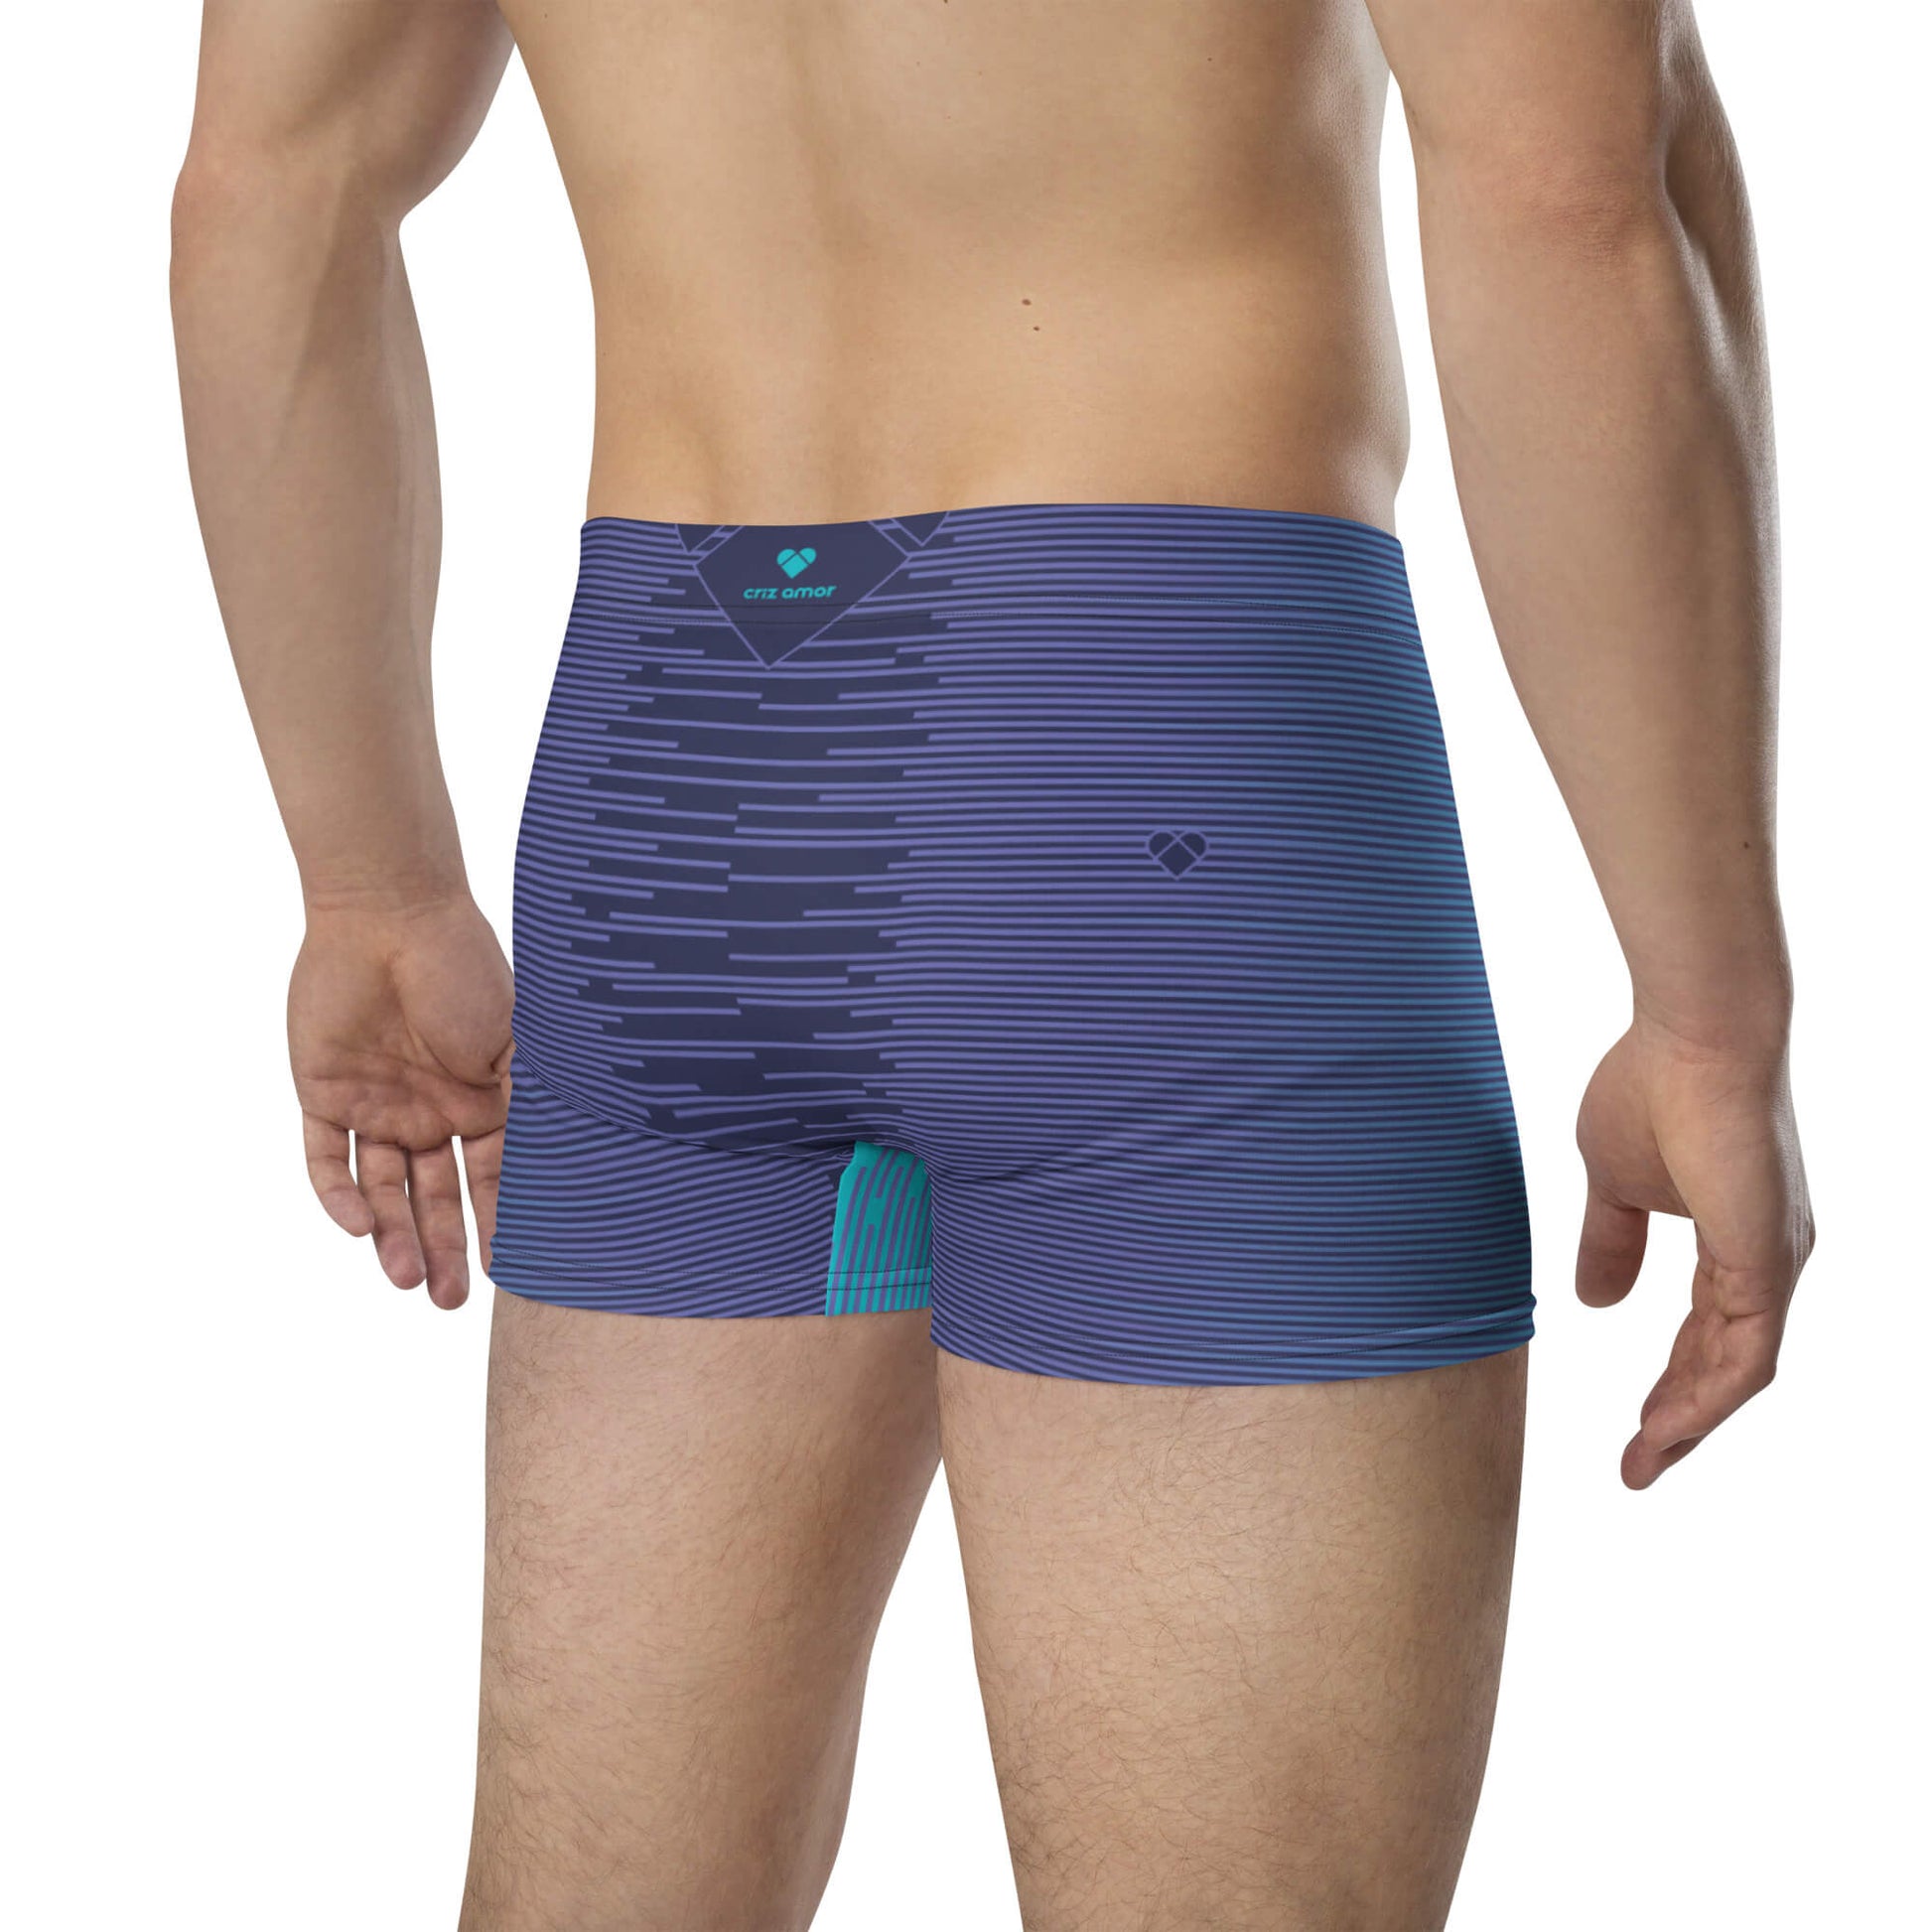 Stylish Men's Underwear: CRiZ AMOR Amor Dual Collection